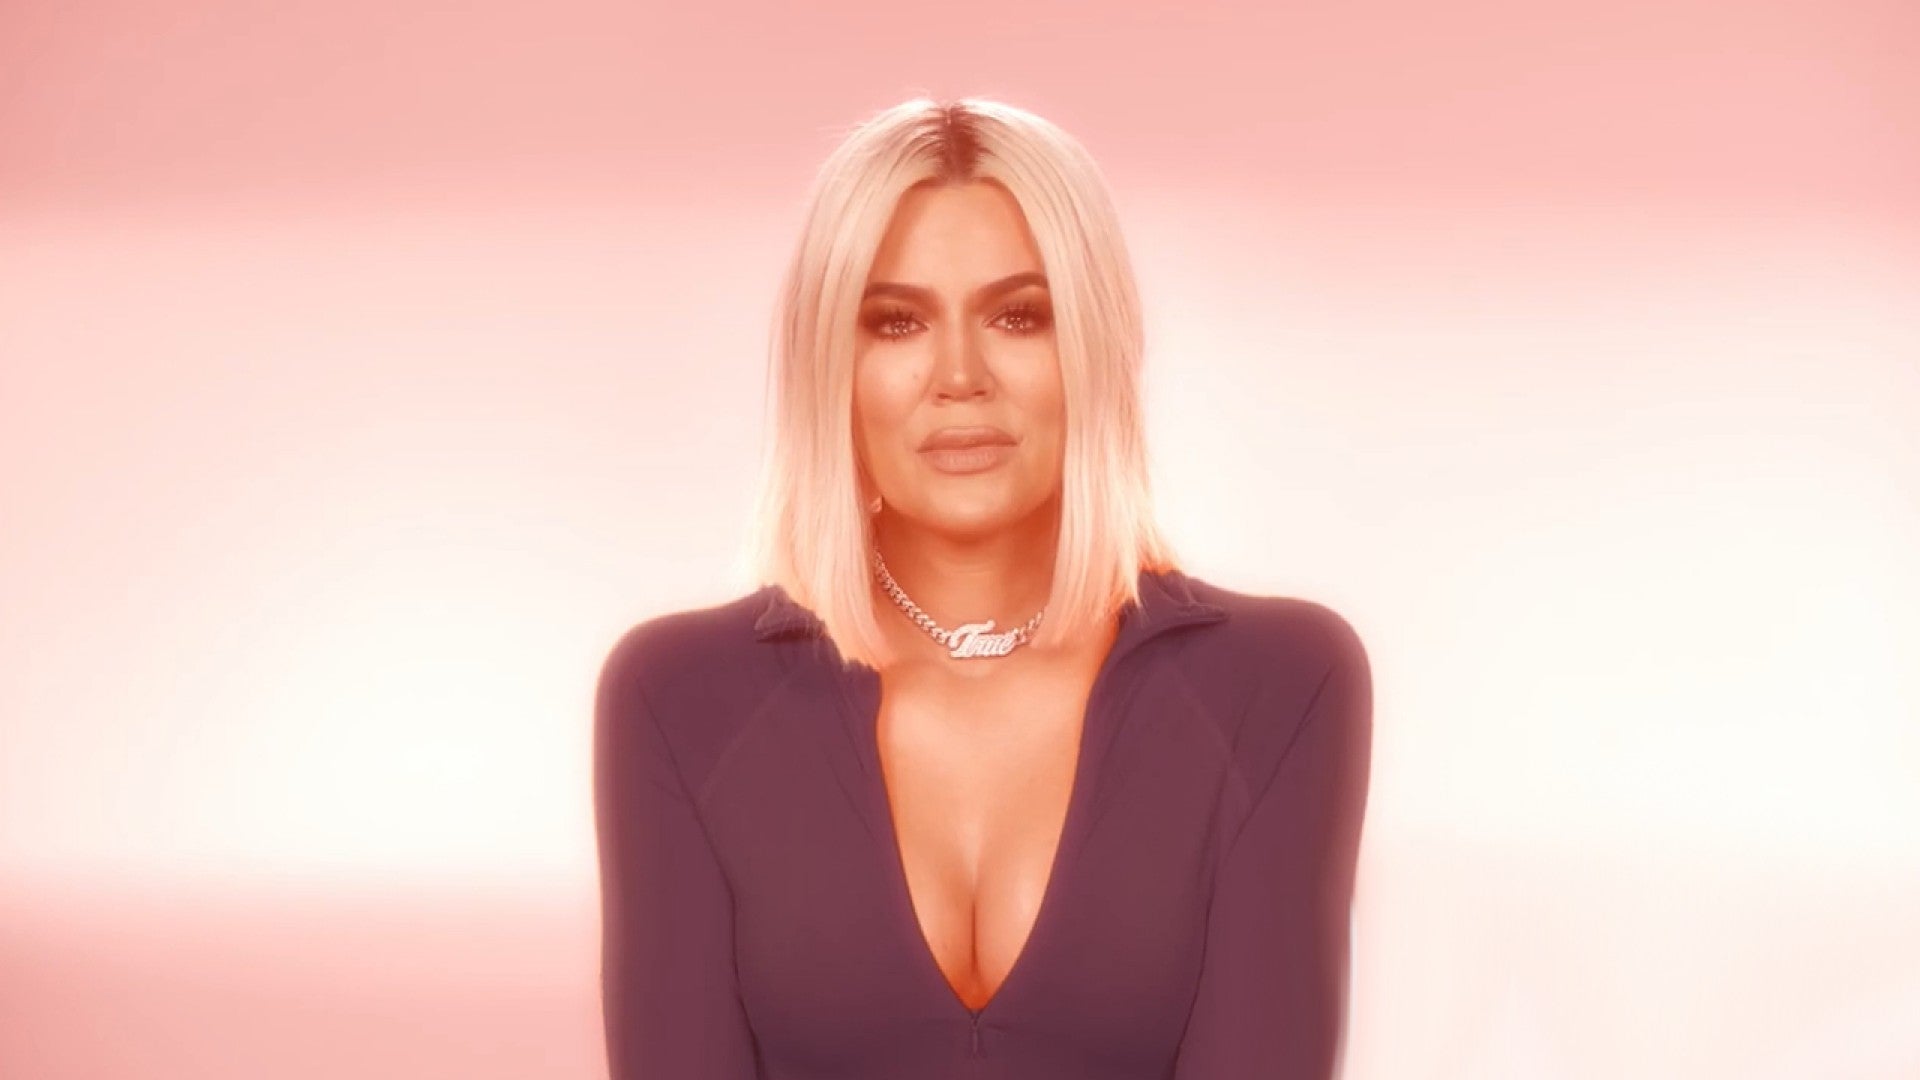 Khloé Kardashian, Kylie Jenner talk Jordyn Woods cheating scandal